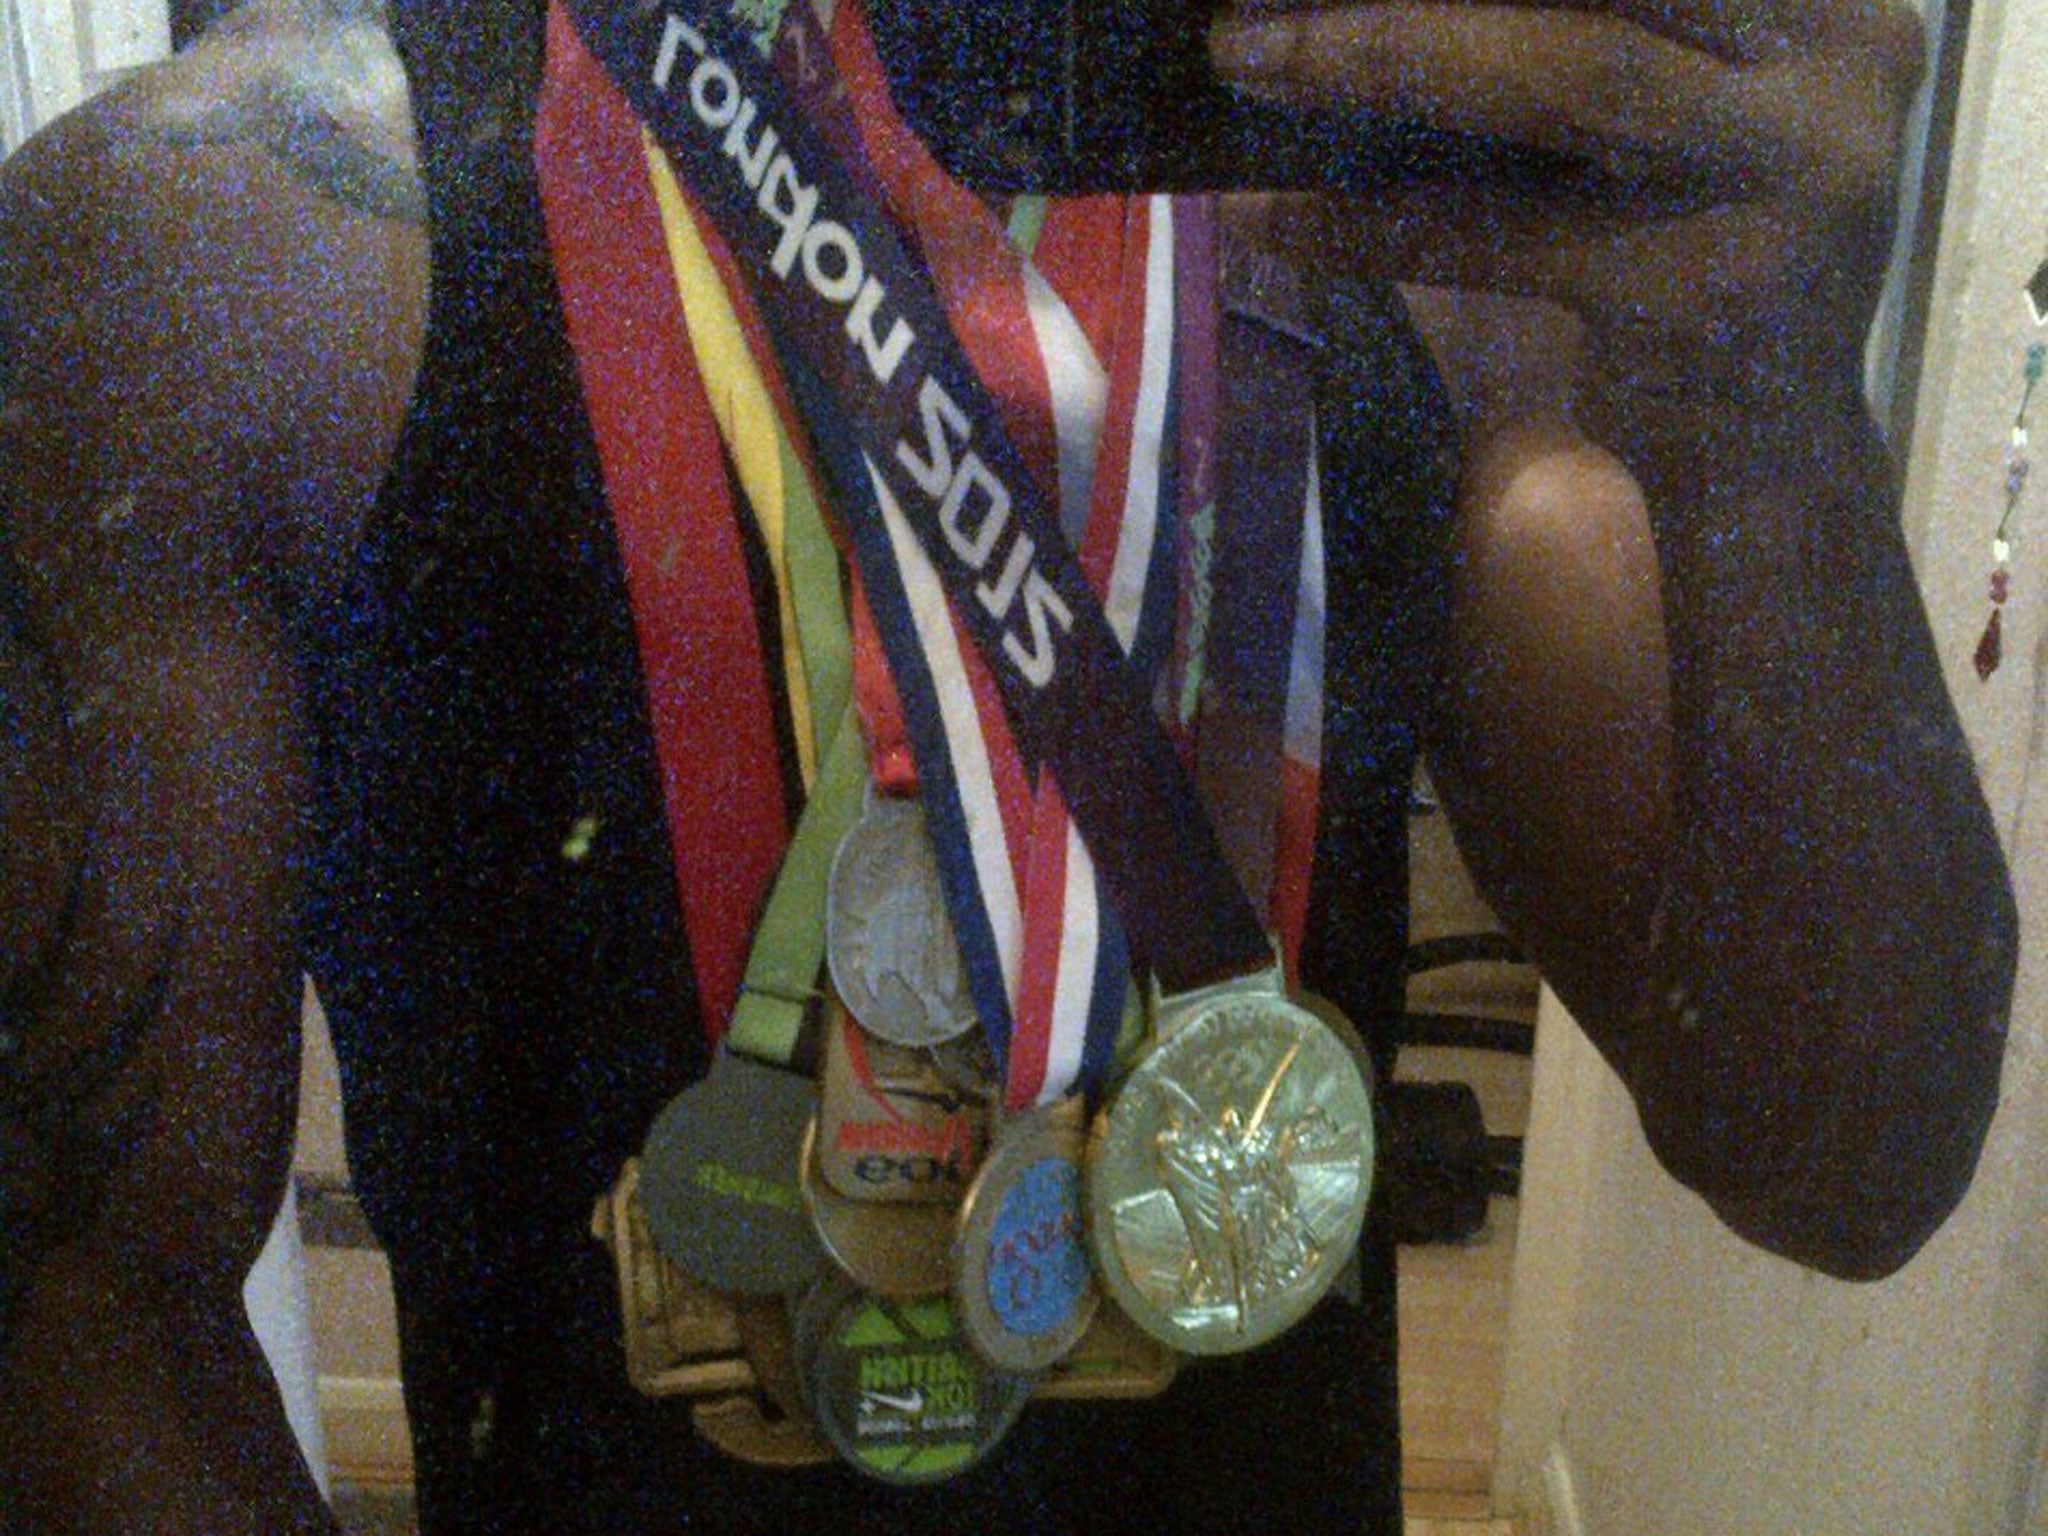 Jason Scotland-Williams with his previous marathon medals